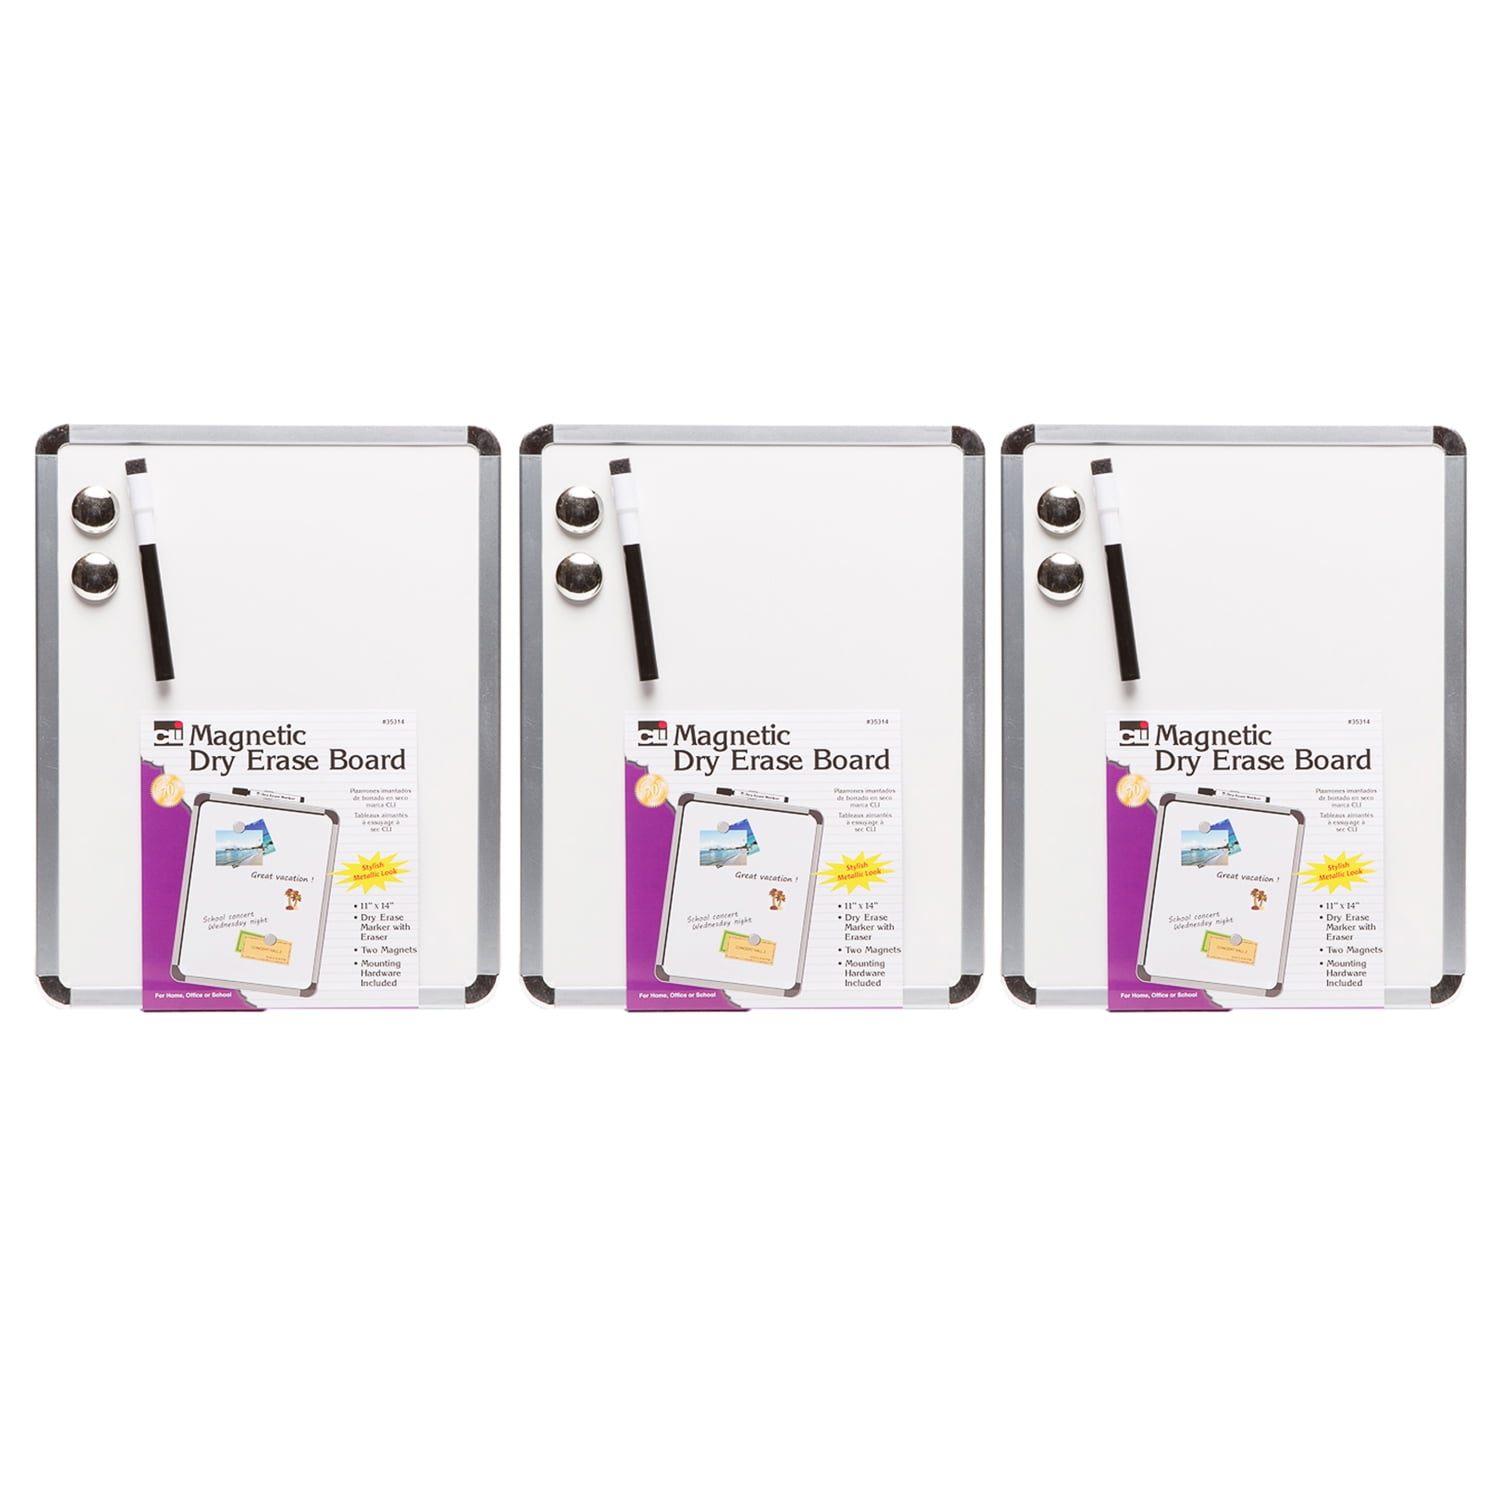 6 SRX Magnetic Dry Erase Markers VALUE PACK Magnetic Dry Erase Board 11" x 14" 